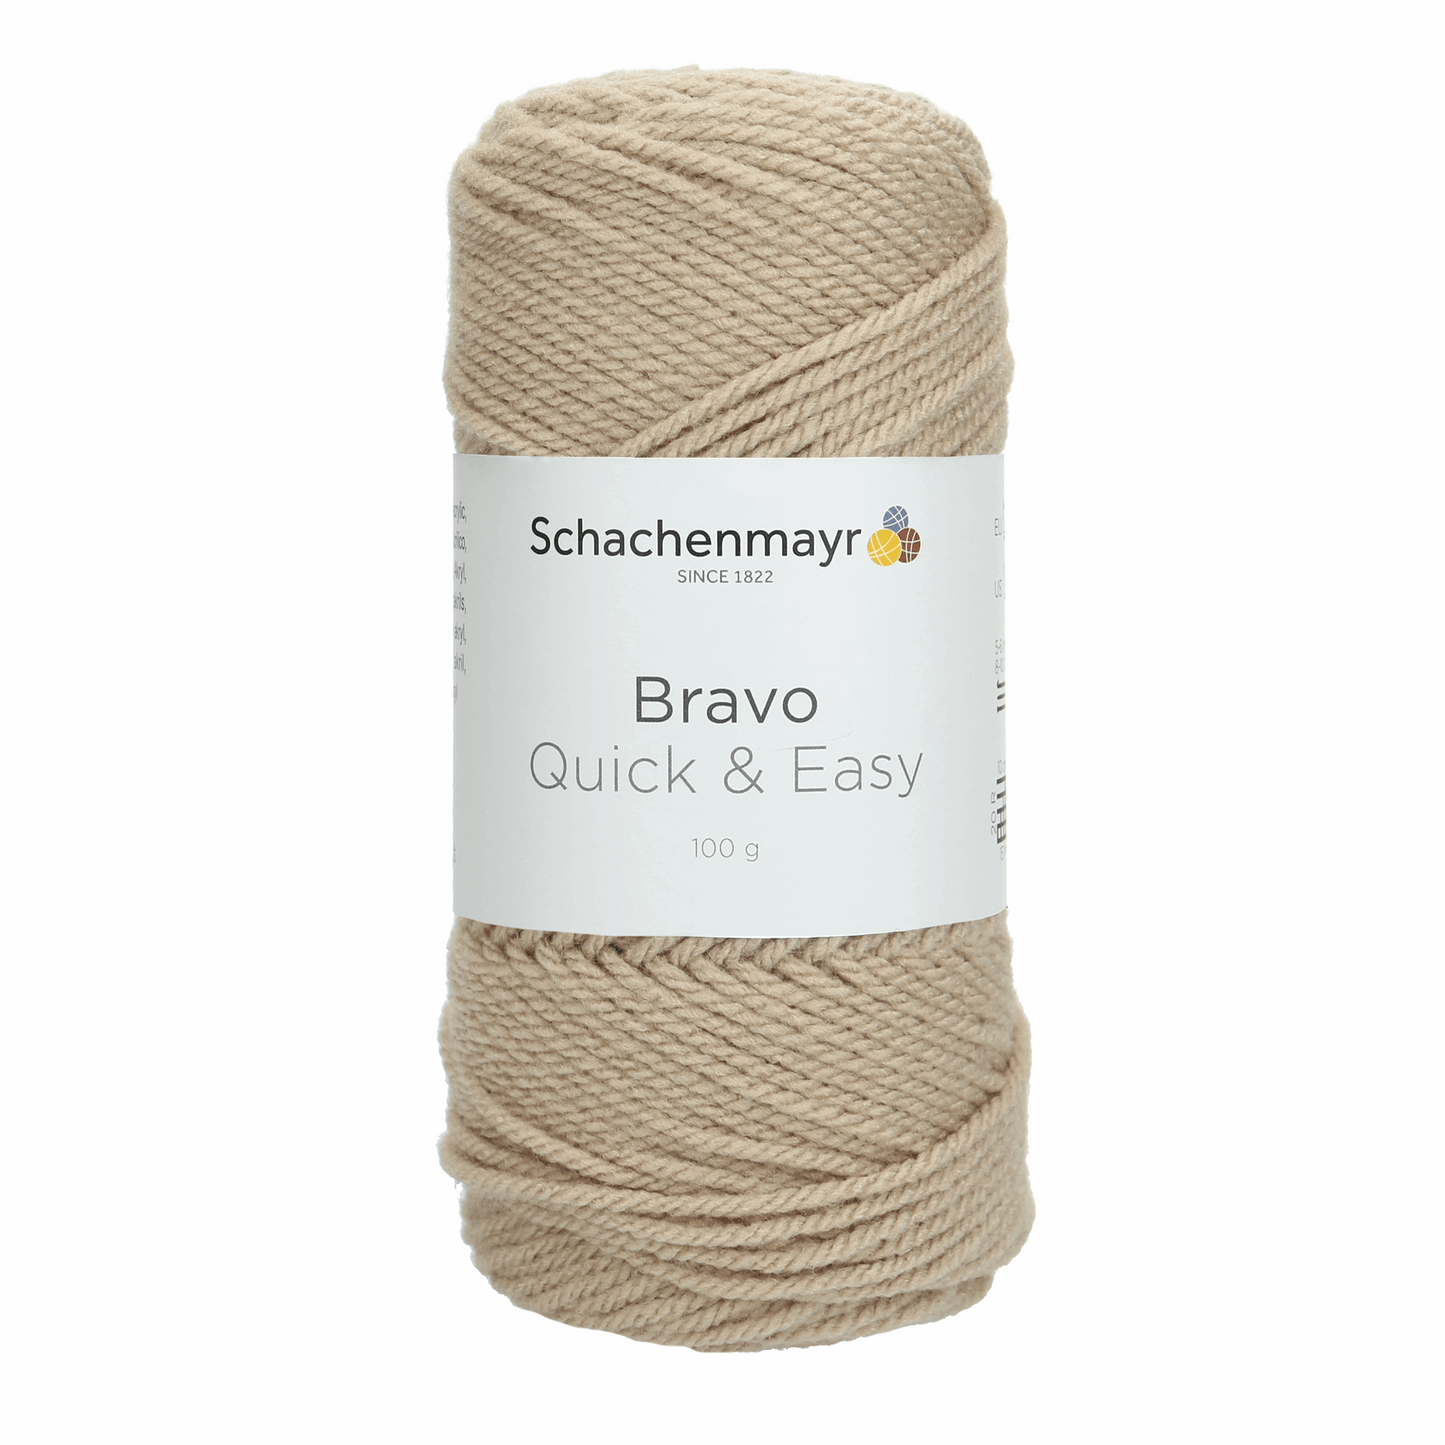 Schachenmayr Bravo quick & easy 100g, 90590, Farbe sisal melier 8267